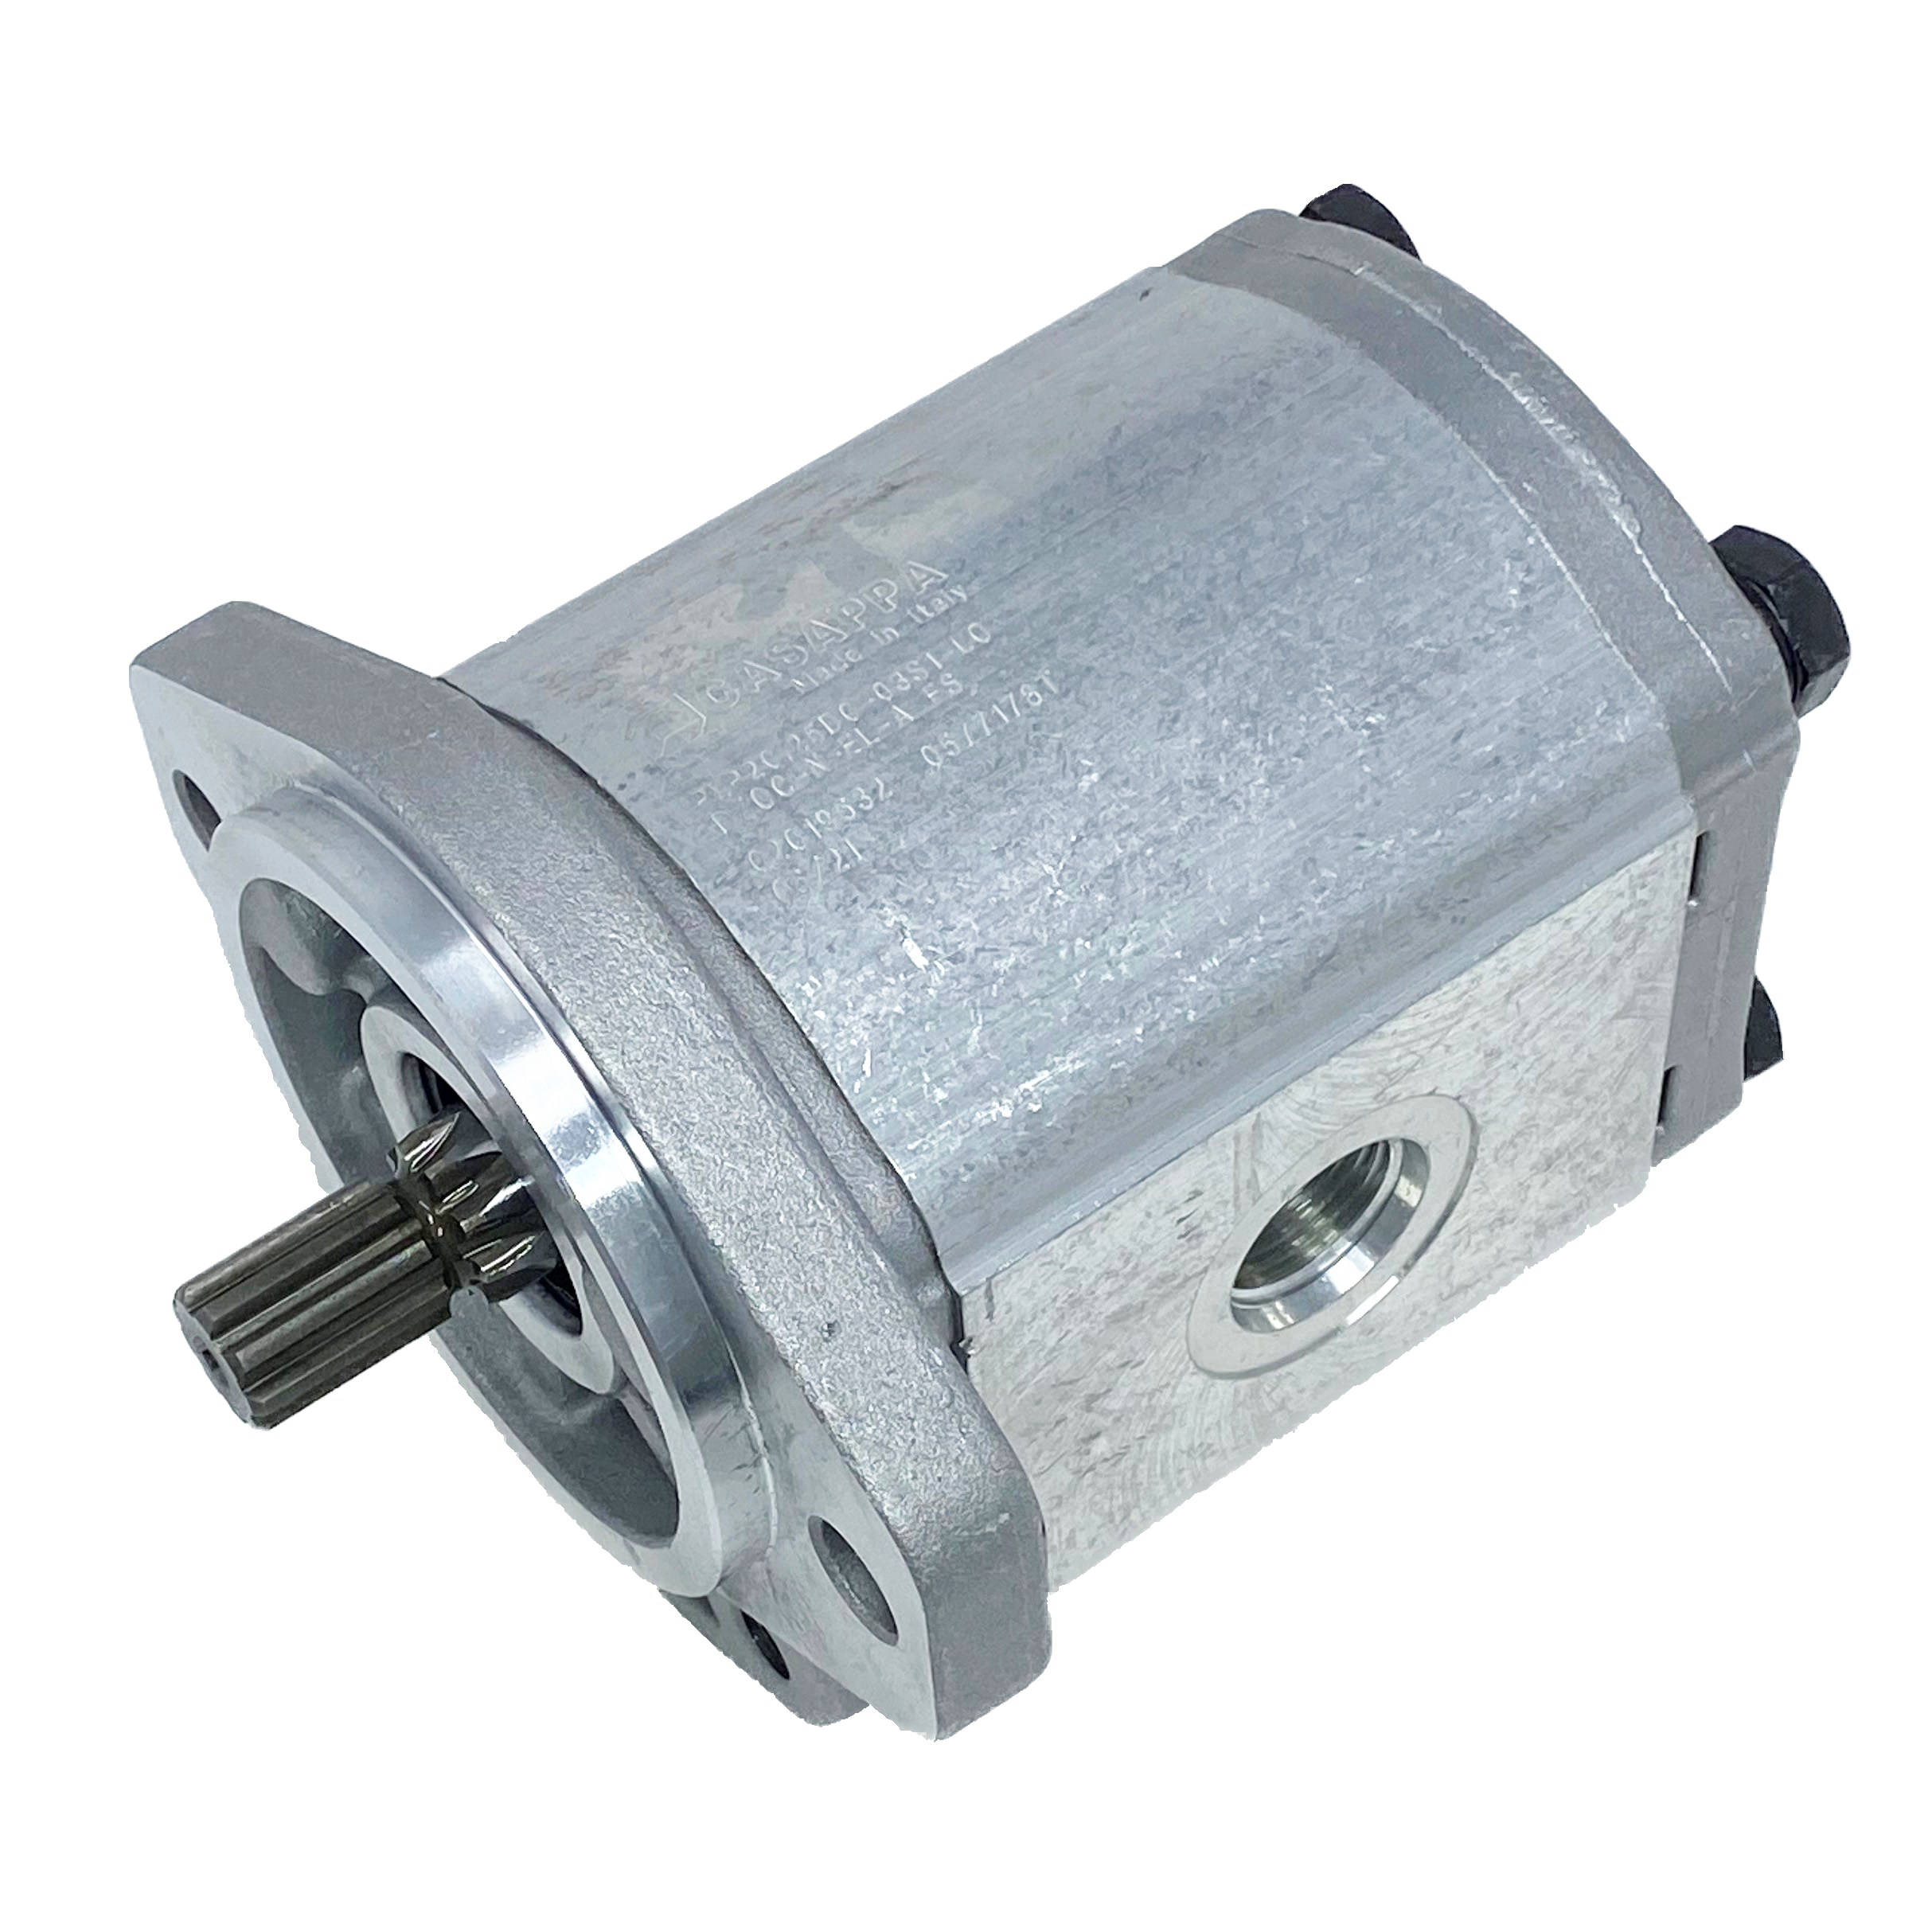 PLM20.25B0-03S1-LOC/OD-N-EL : Casappa Polaris Gear Motor, 26.42cc, 2465psi Rated, 3045RPM, Reversible Interior Drain, 9T 16/32dp Shaft, SAE A 2-Bolt Flange, 0.625 (5/8") #10 SAE Inlet, 0.75 (3/4") #12 SAE Outlet, Aluminum Body & Flange